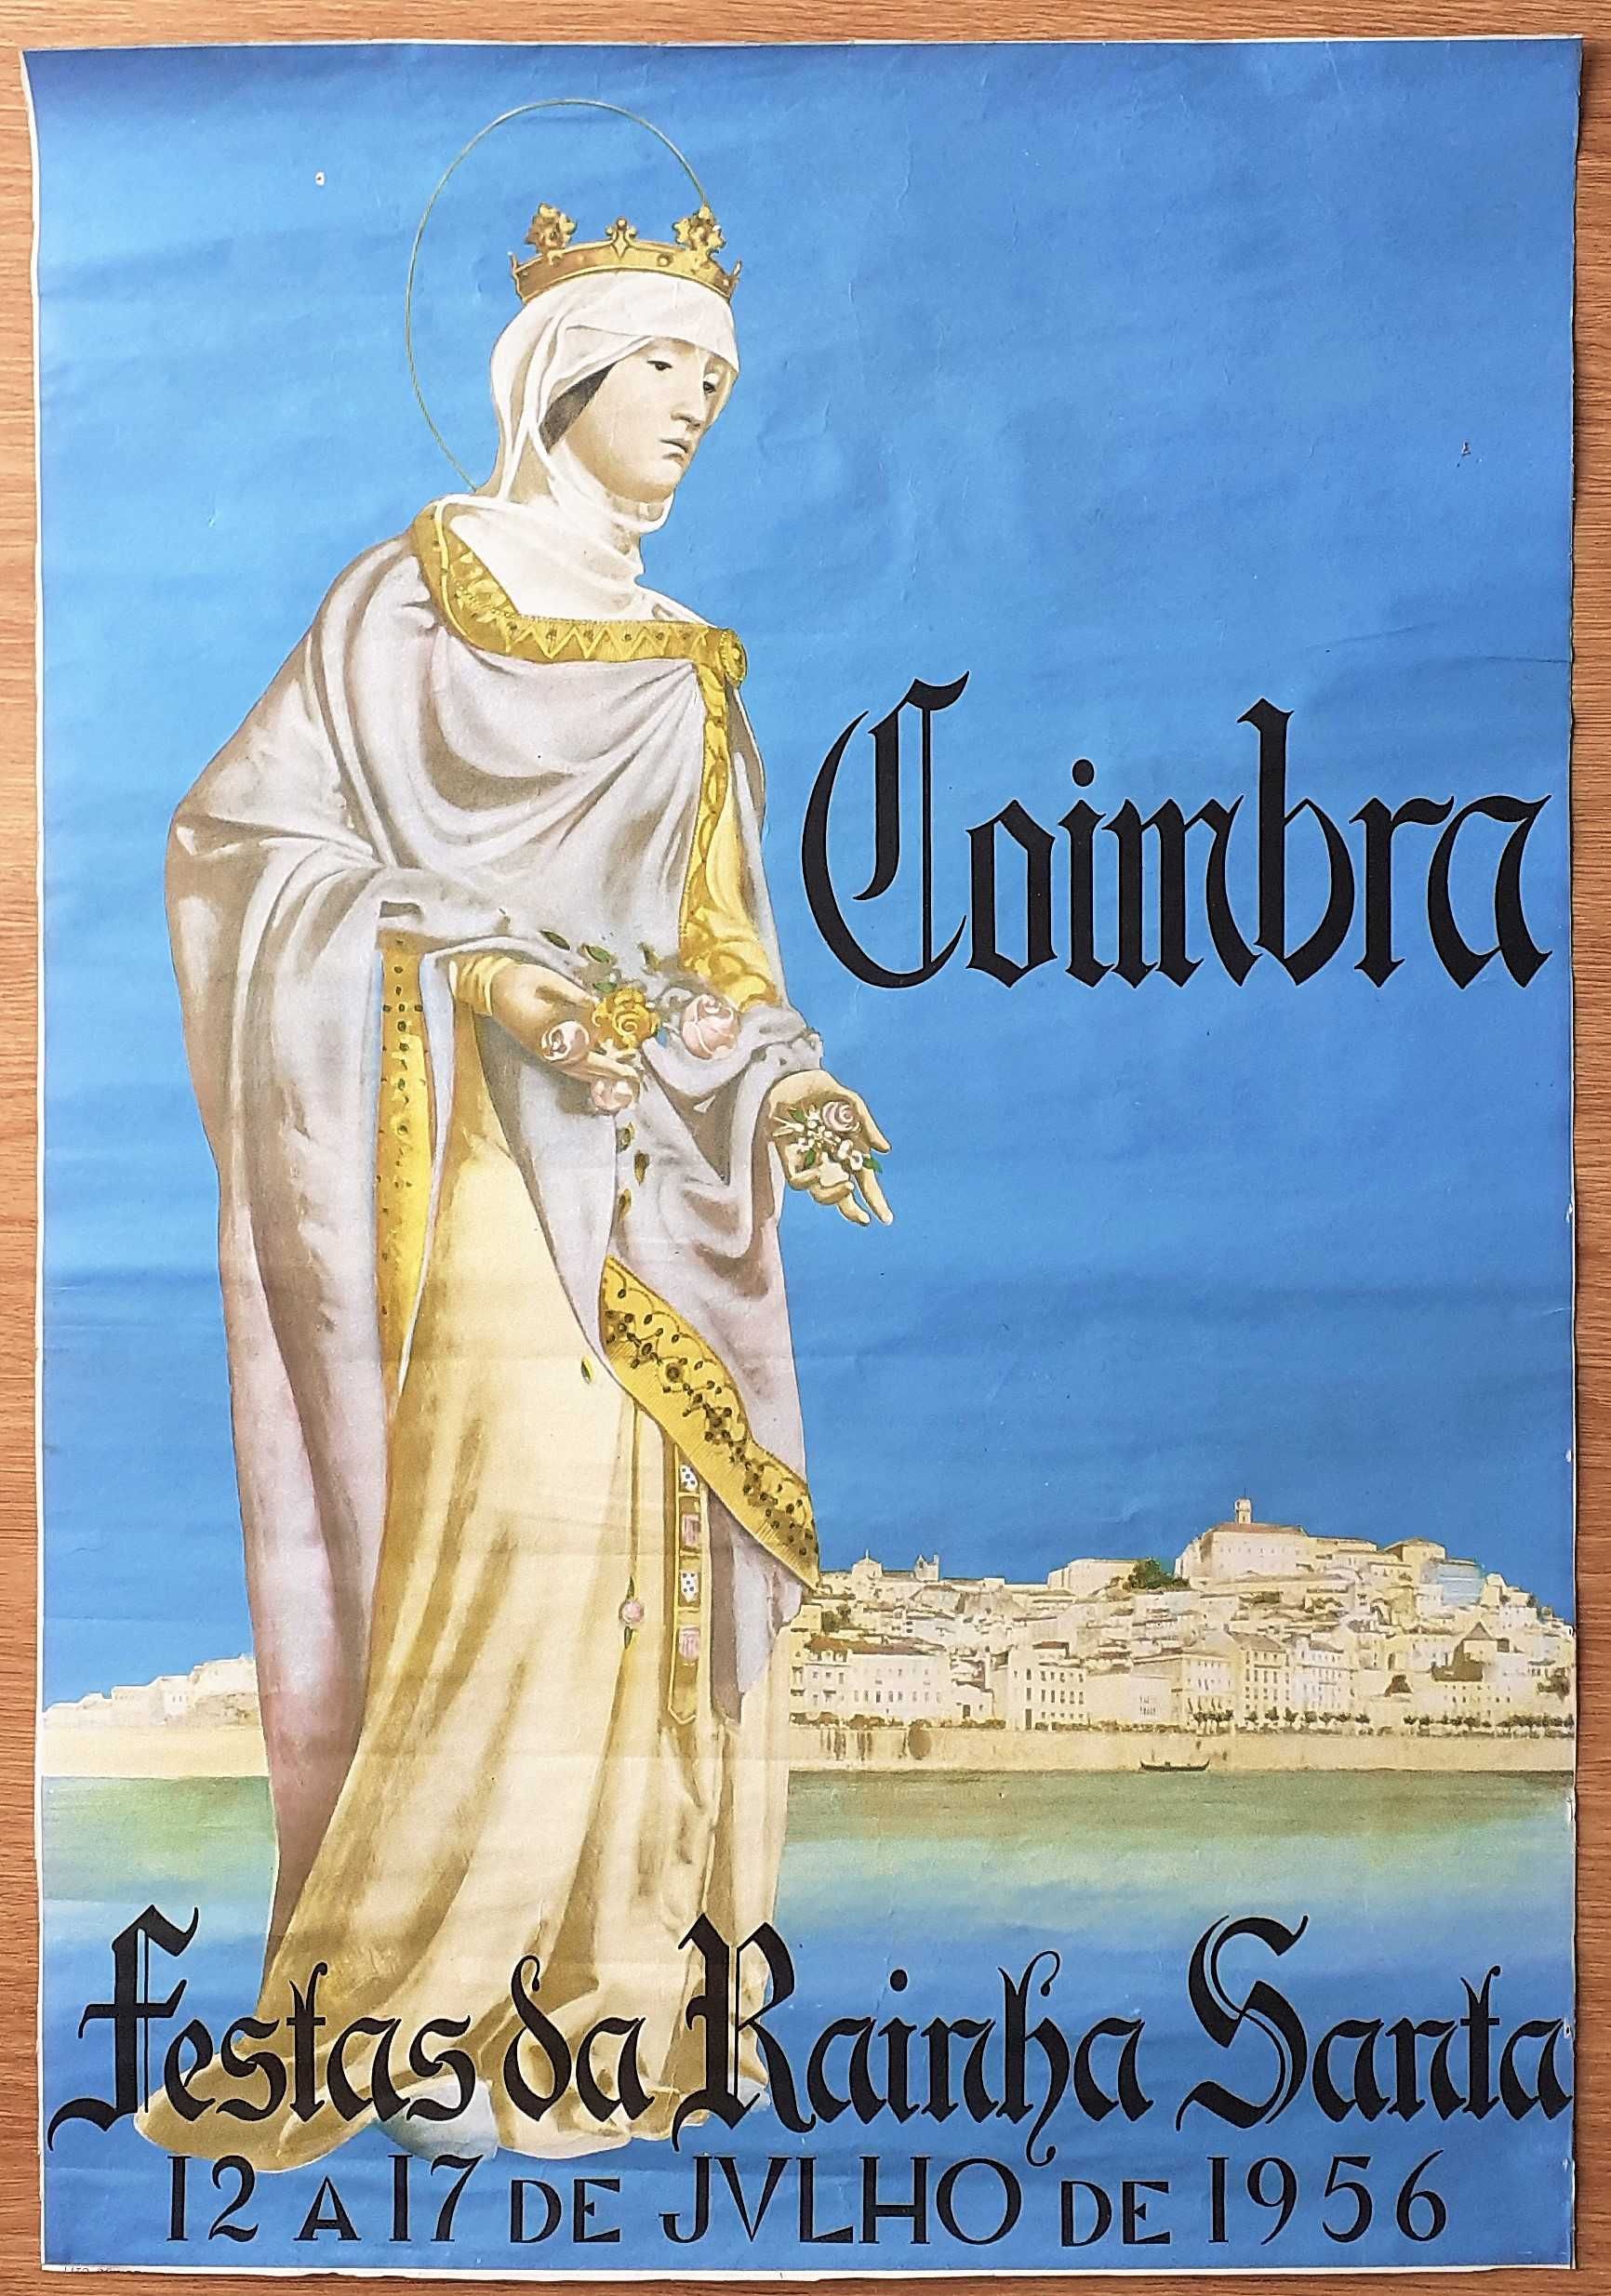 1956 Festas da Rainha Santa Coimbra POSTER de 1956 Cartaz 96x66 cm